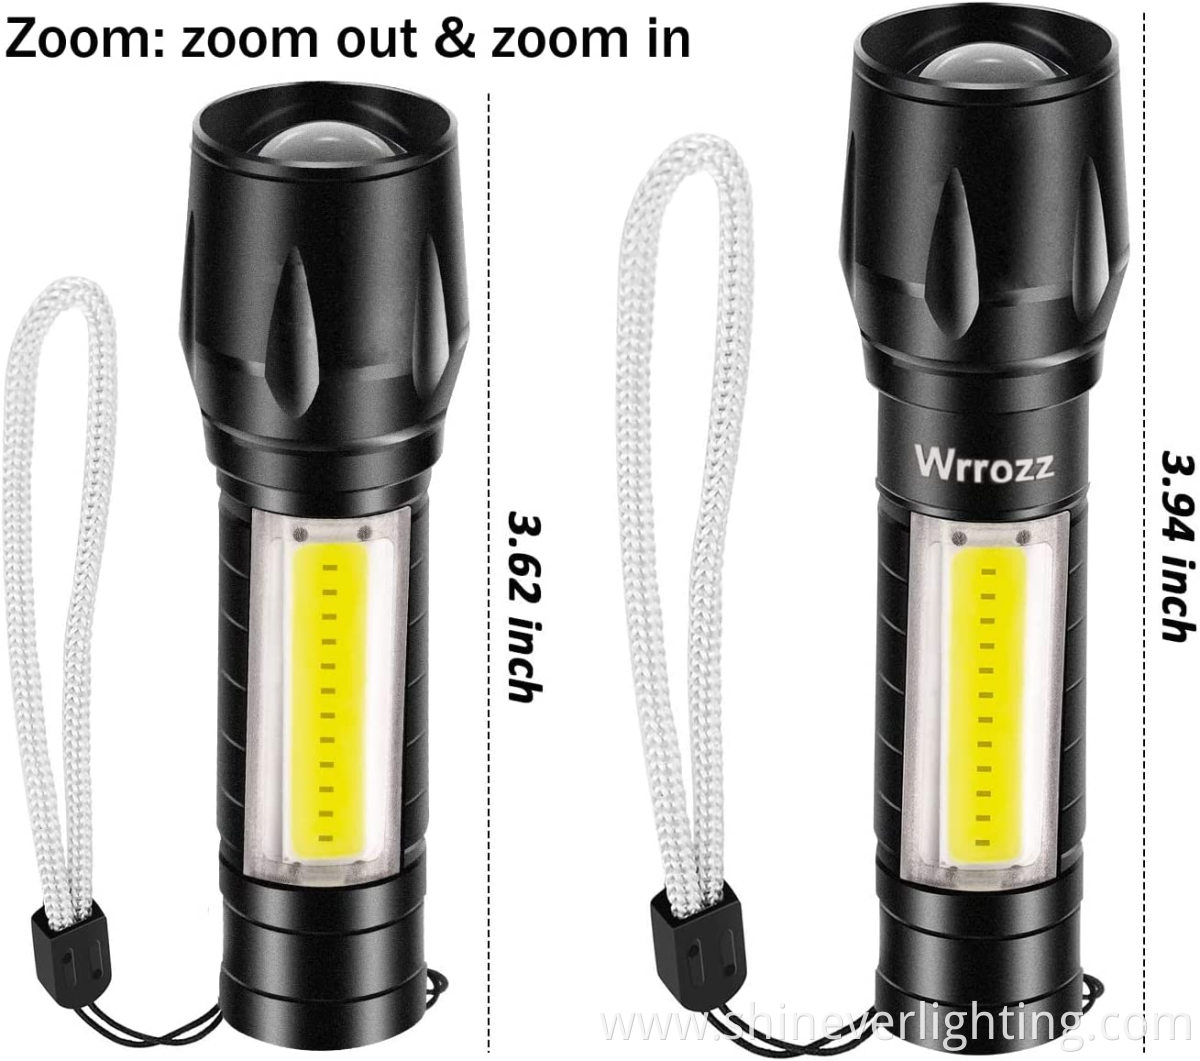 USB-powered flashlight